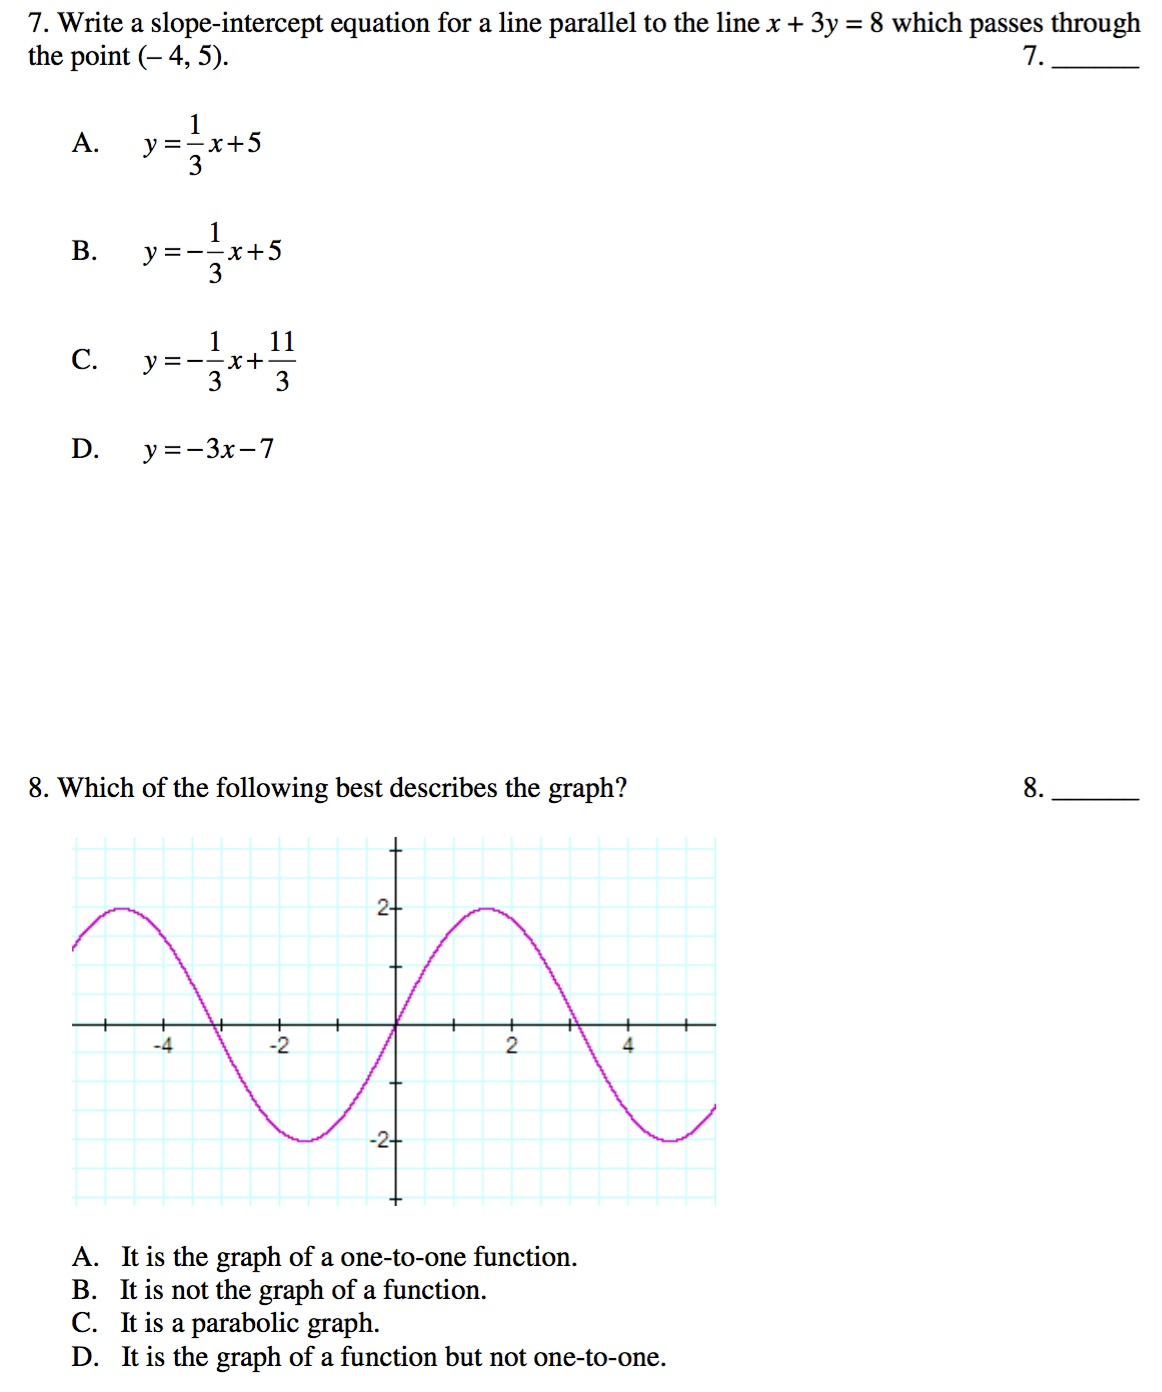 parallel line slope intercept form calculator